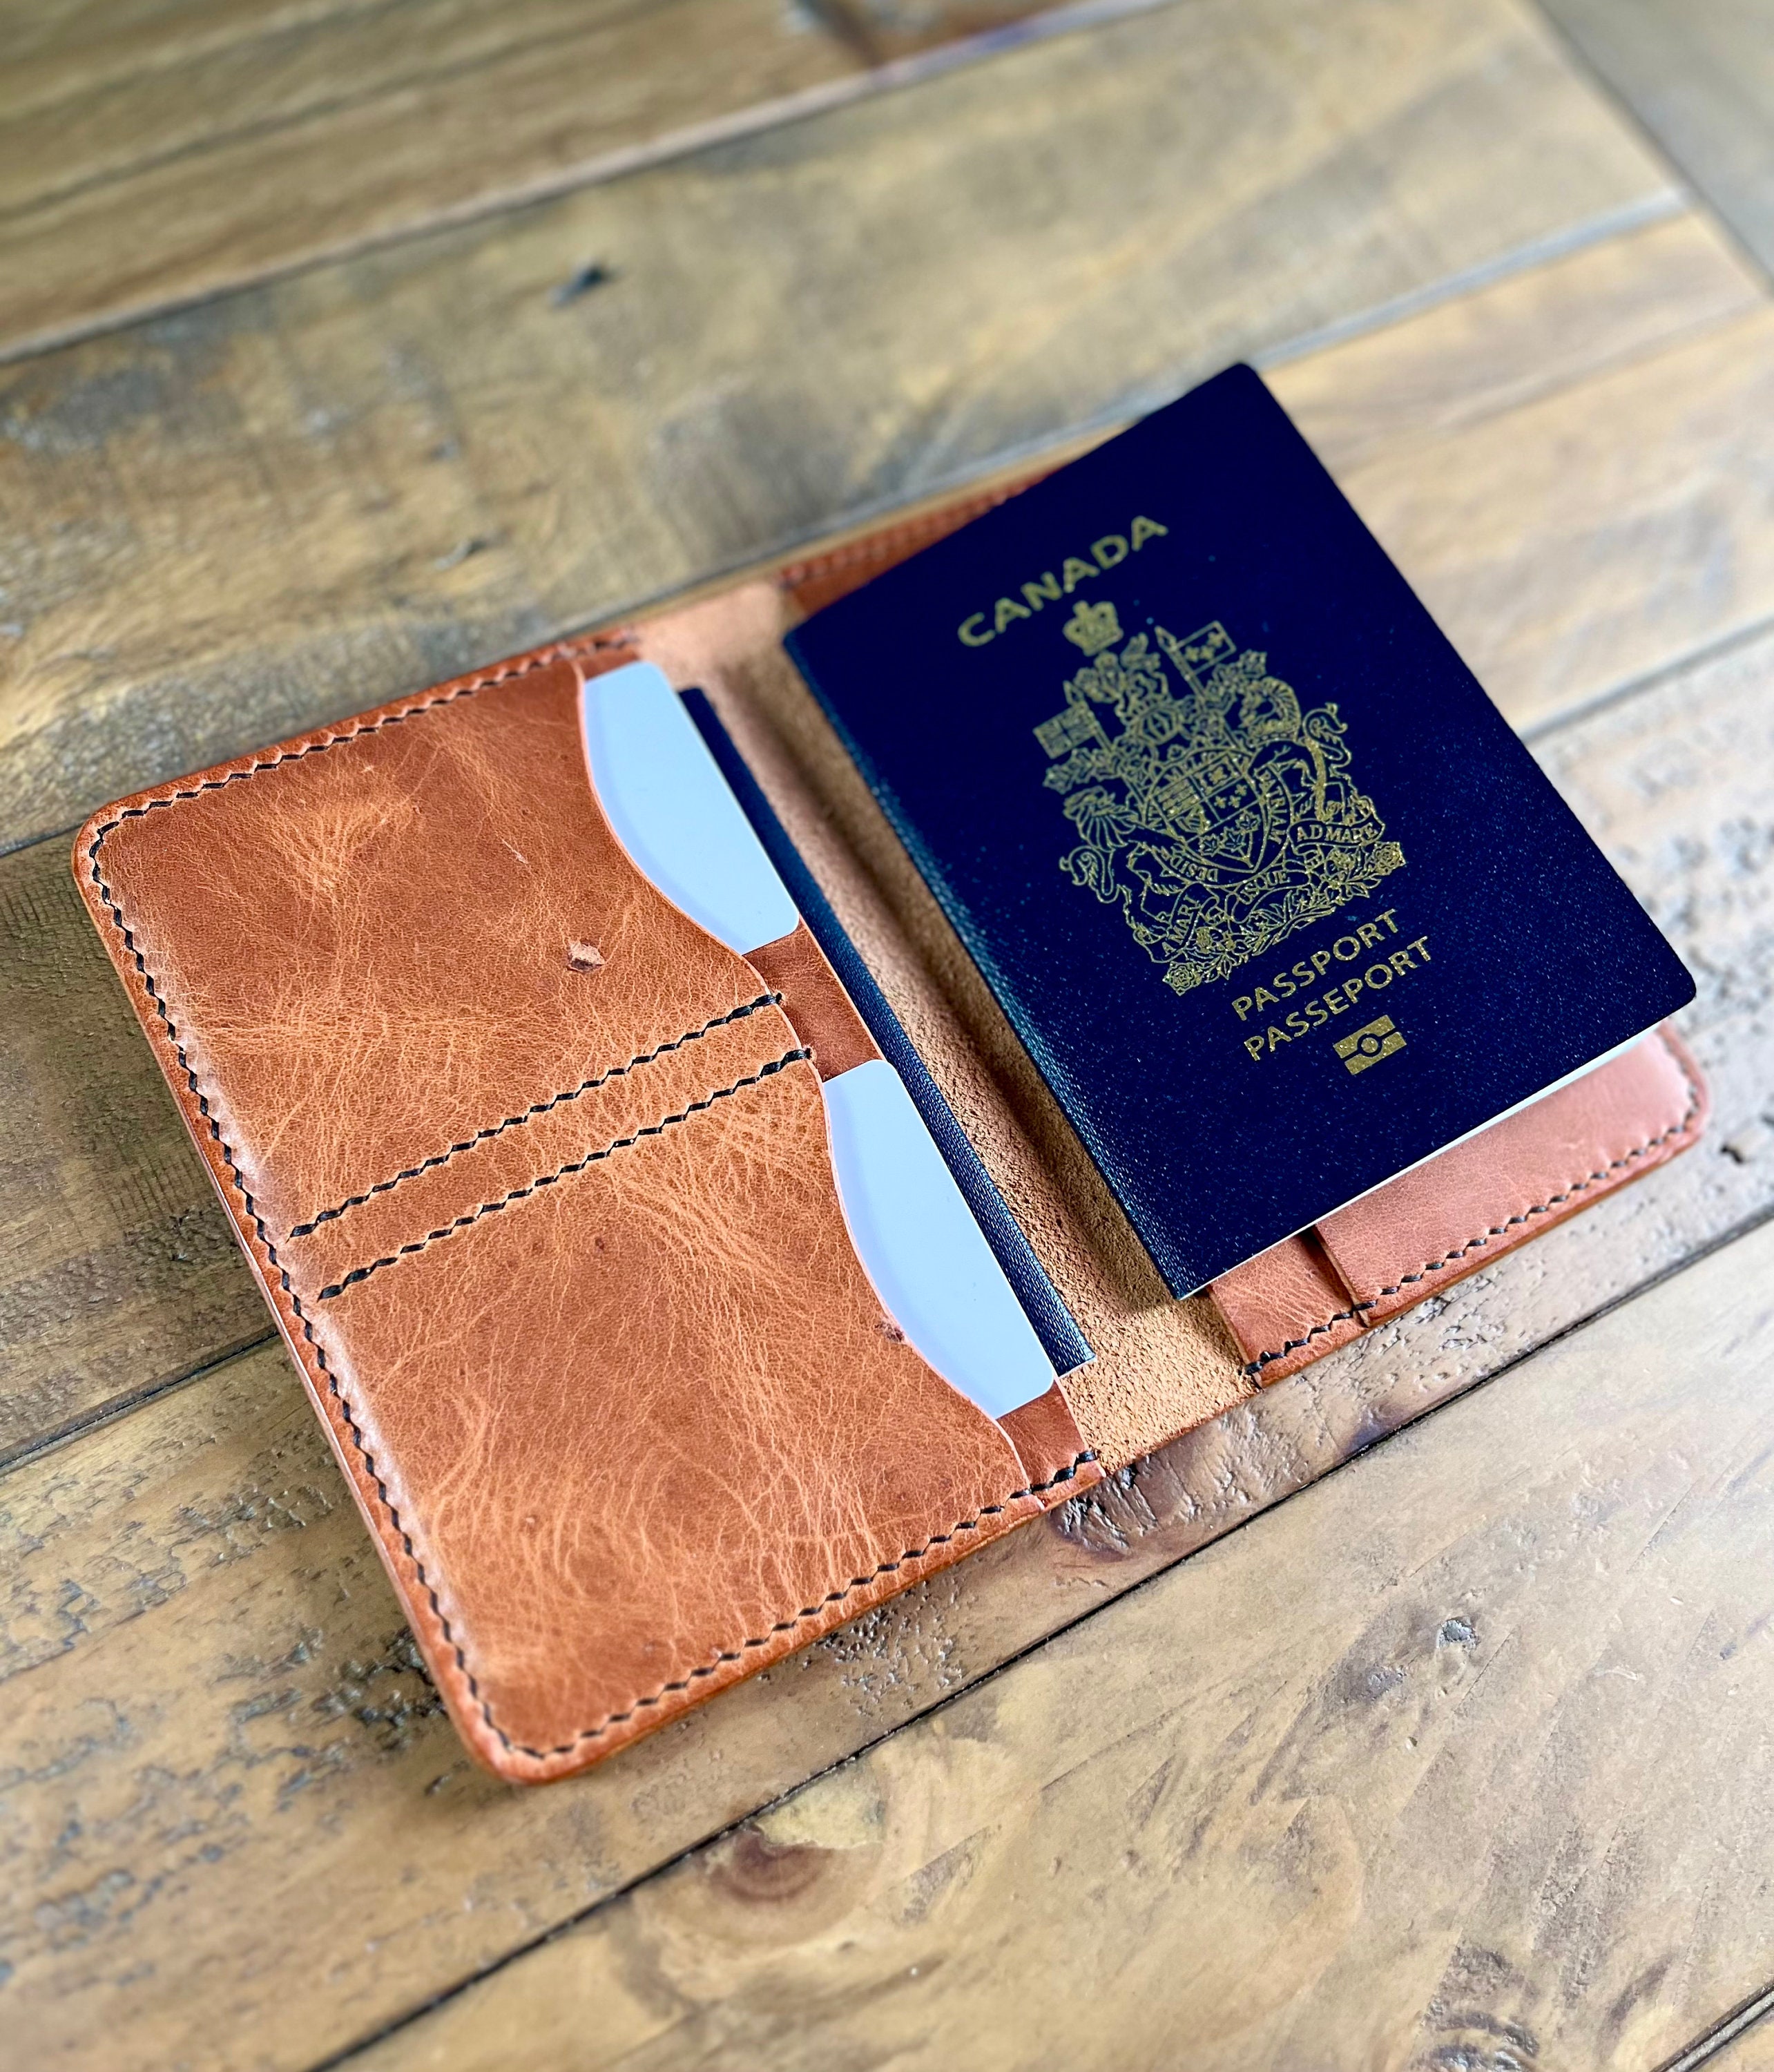 Passport Cover My LV World Tour Monogram - Men - Personalization